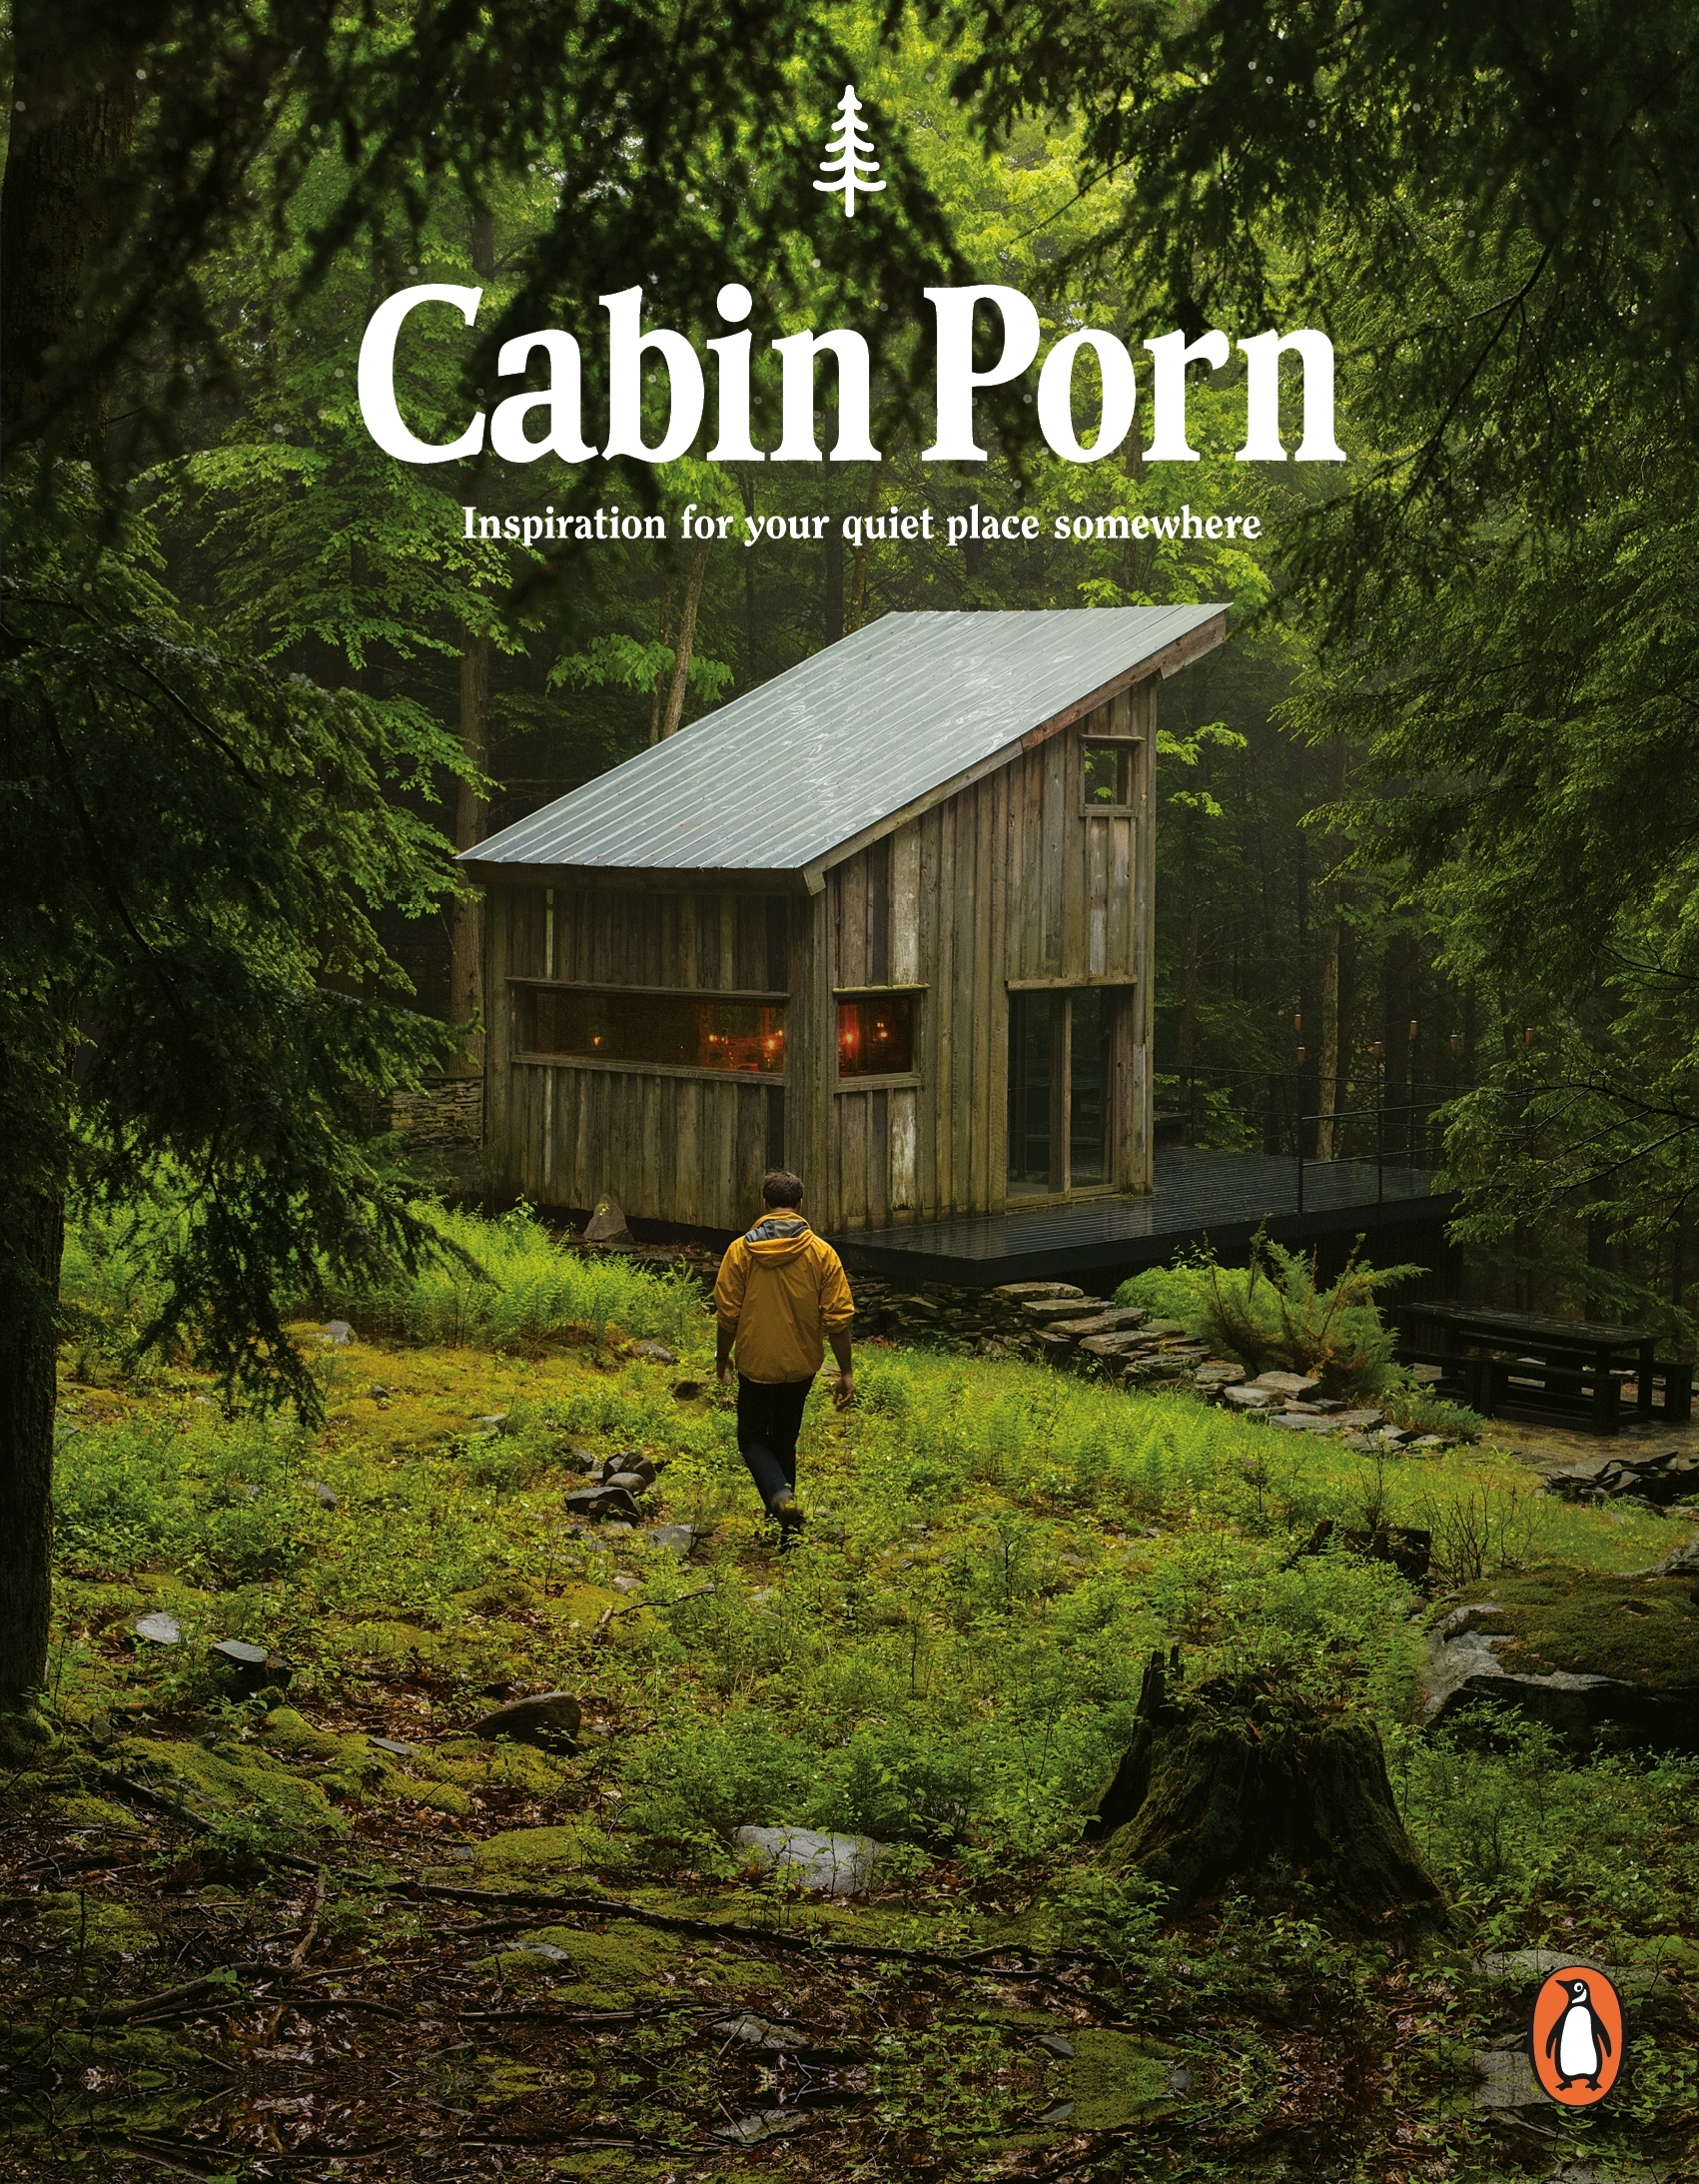 Cabin Porn by Zach Klein - Penguin Books Australia